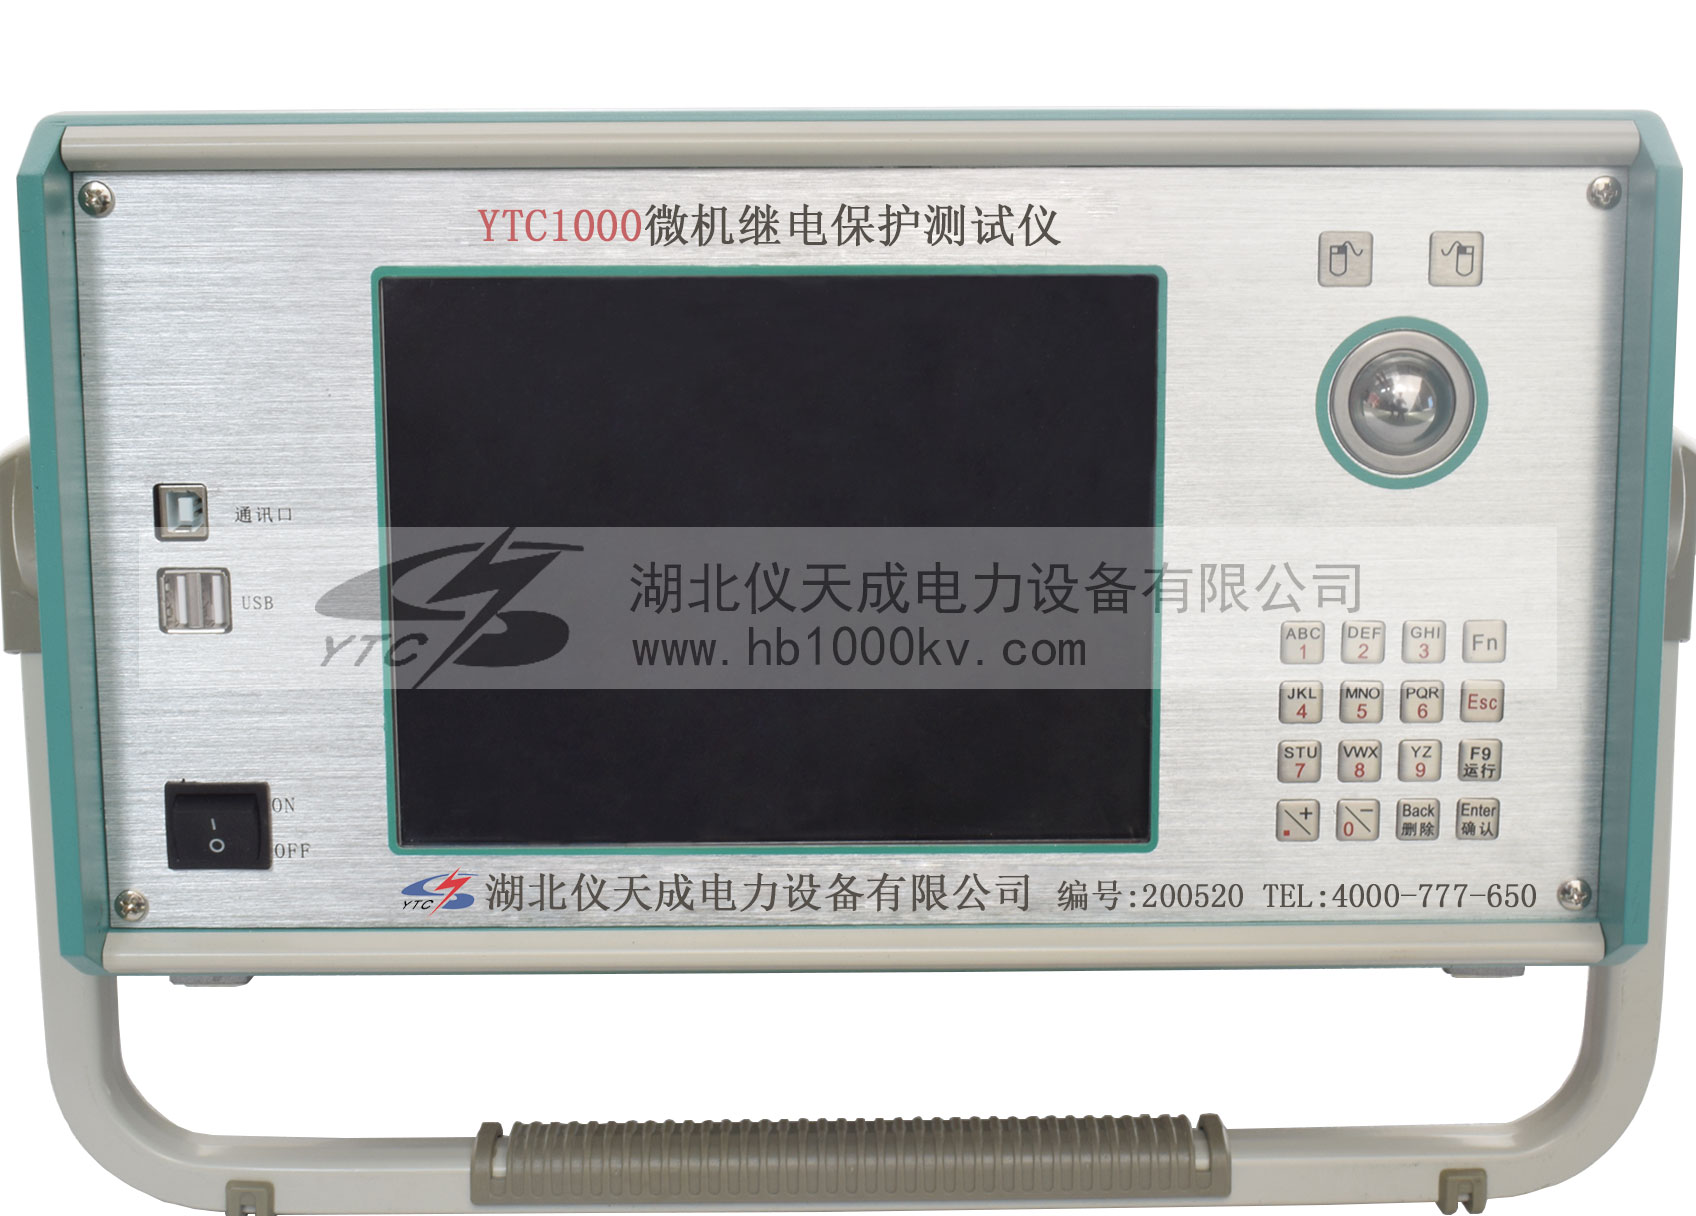 YTC1000微機繼電保護測試儀控制面板